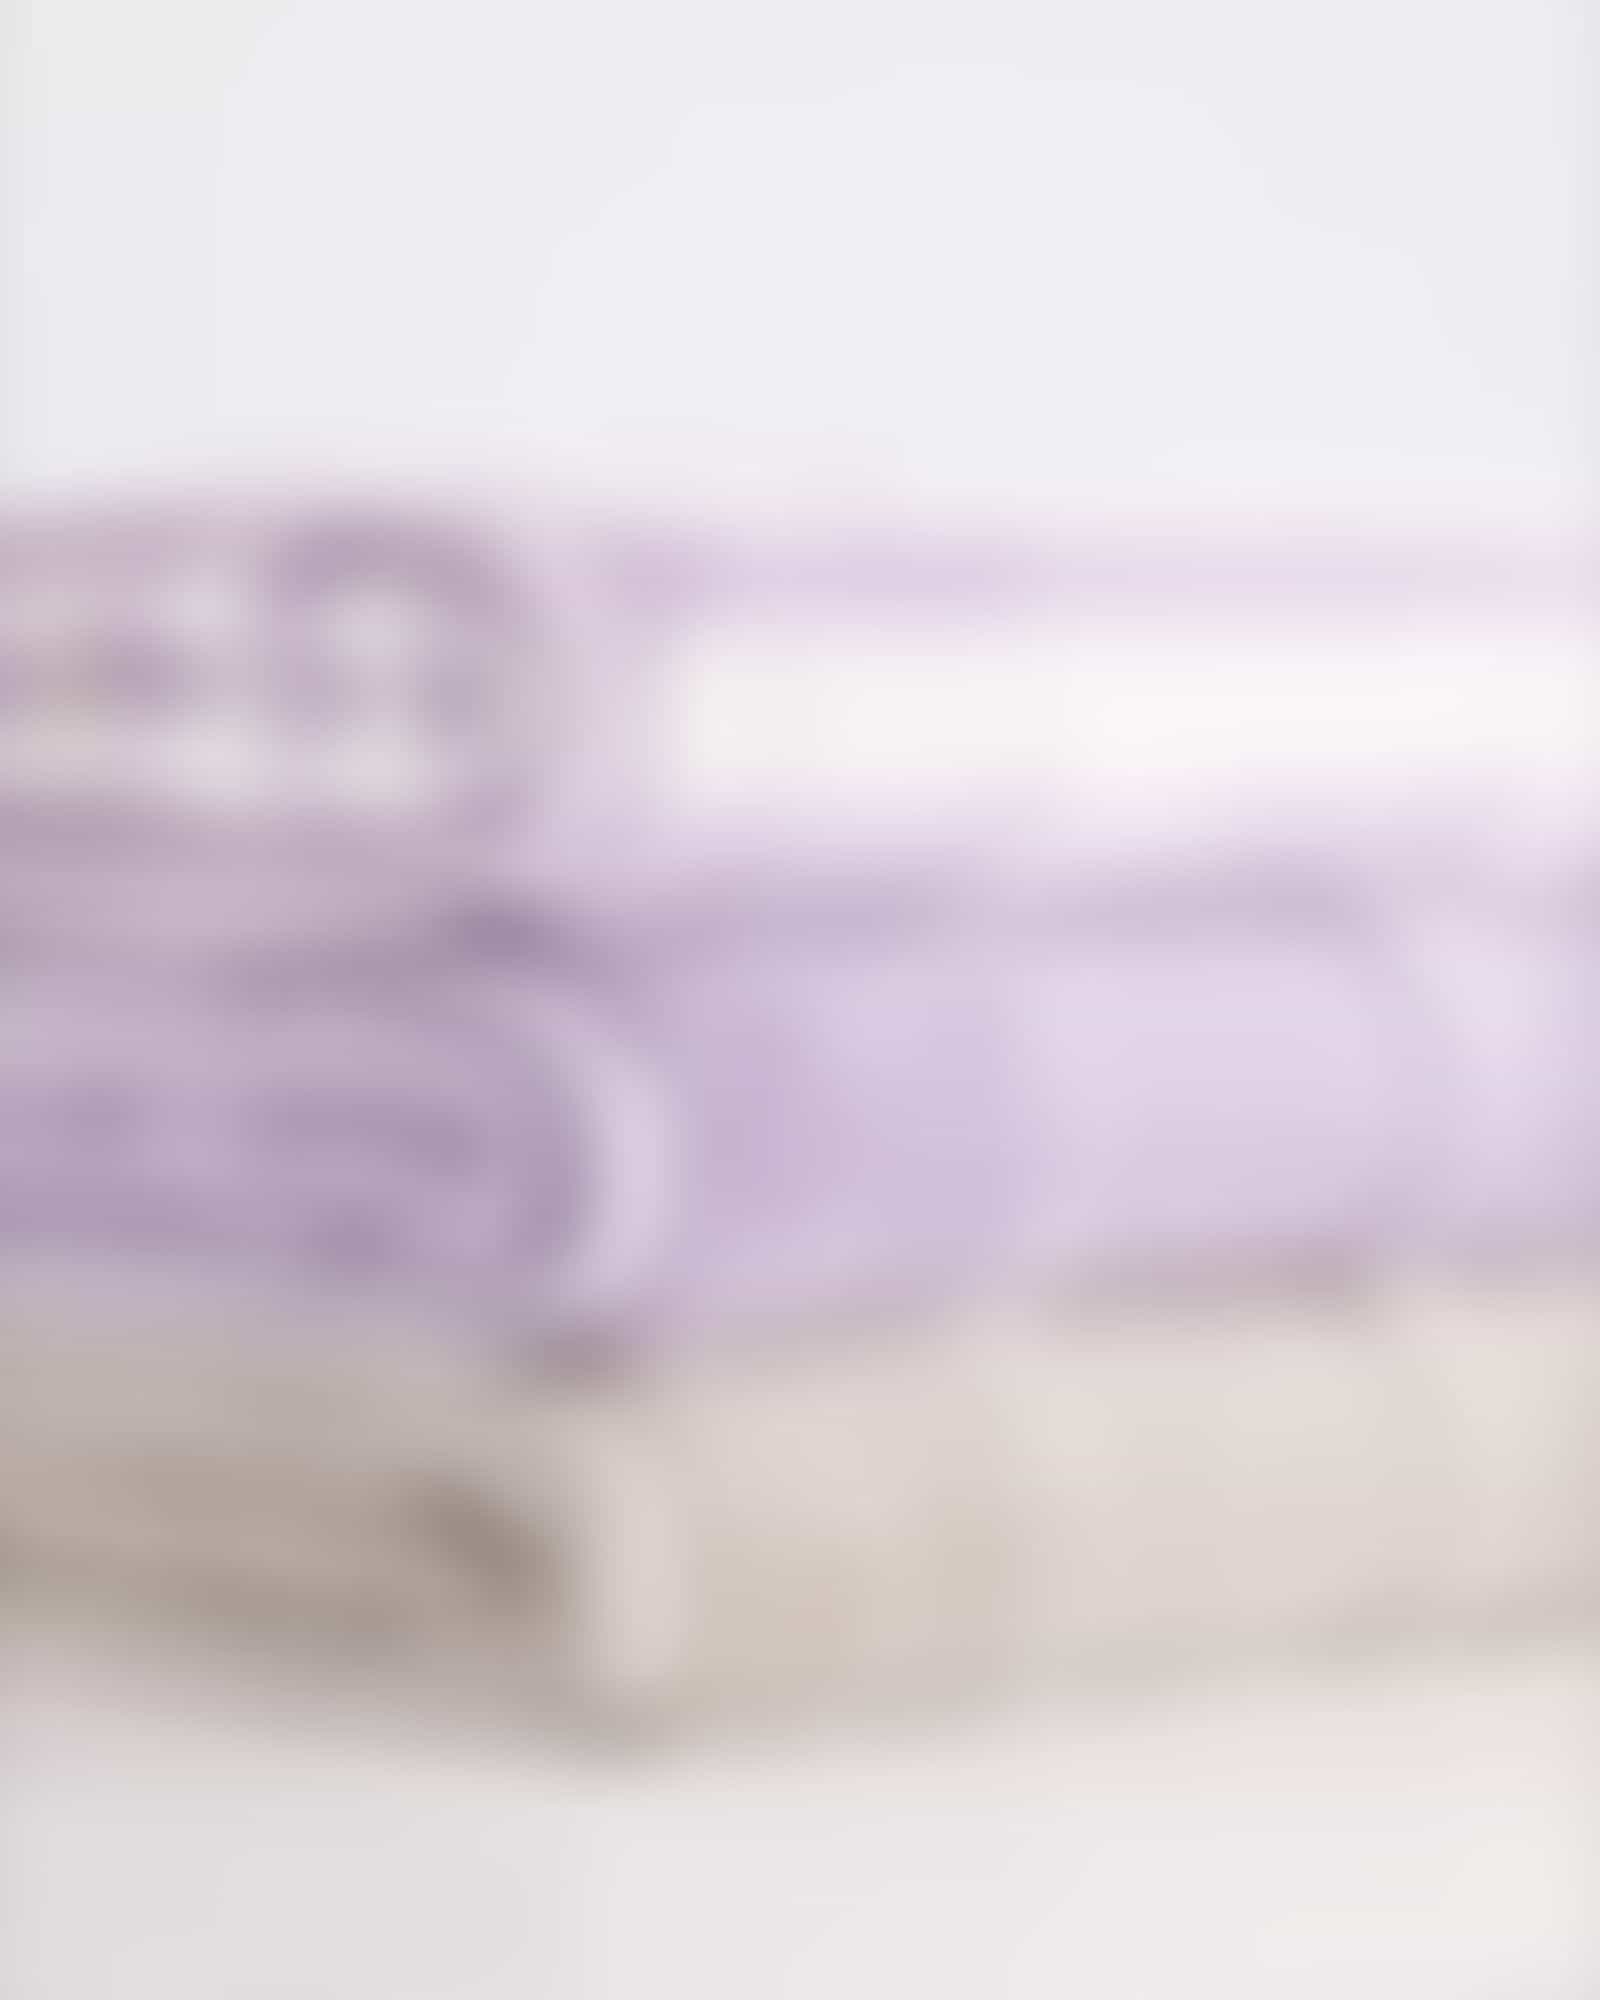 Cawö Noblesse Seasons Streifen 1083 - Farbe: lavendel - 88 - Waschhandschuh 16x22 cm